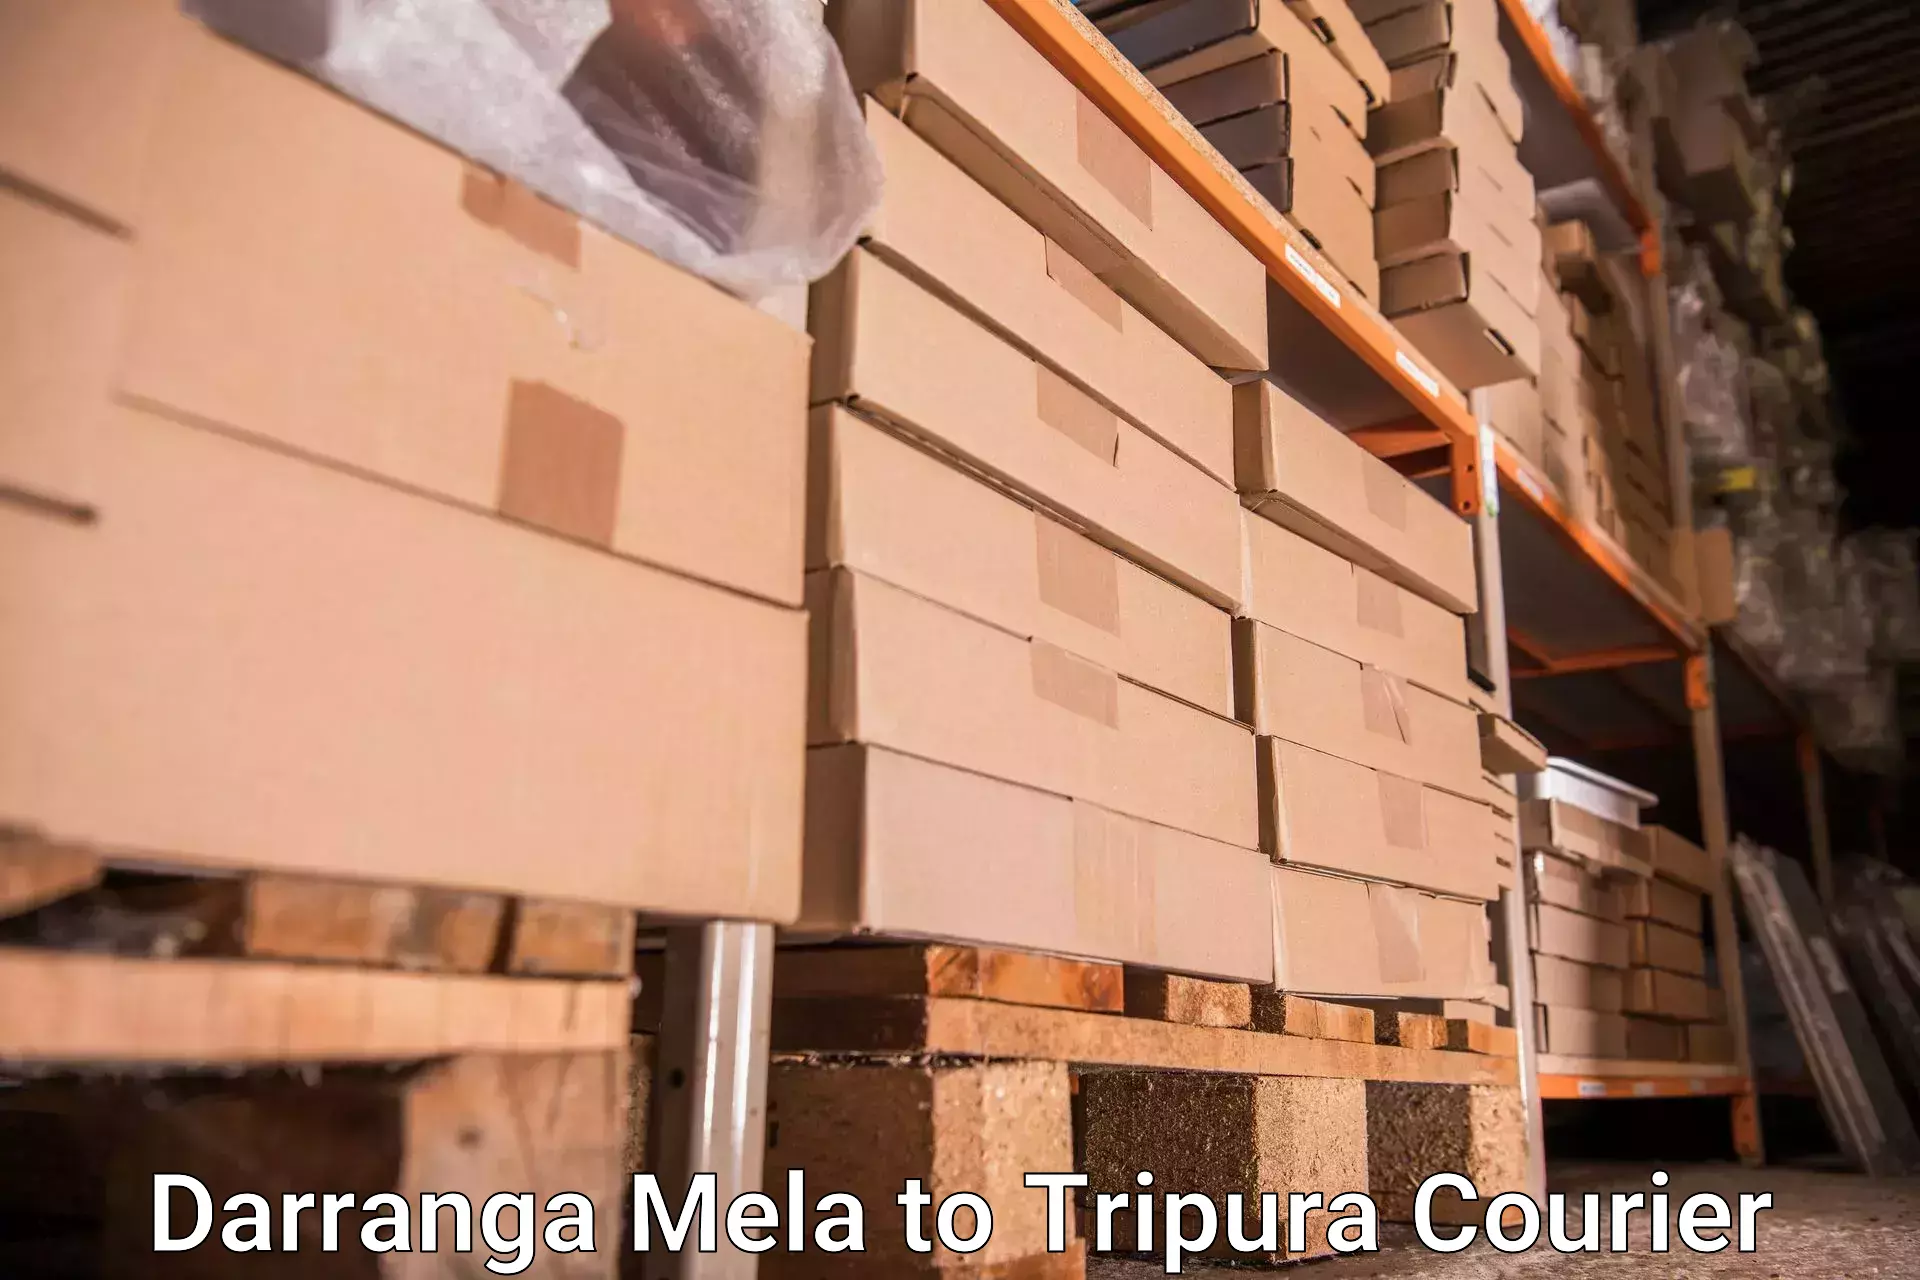 Baggage shipping experience in Darranga Mela to North Tripura